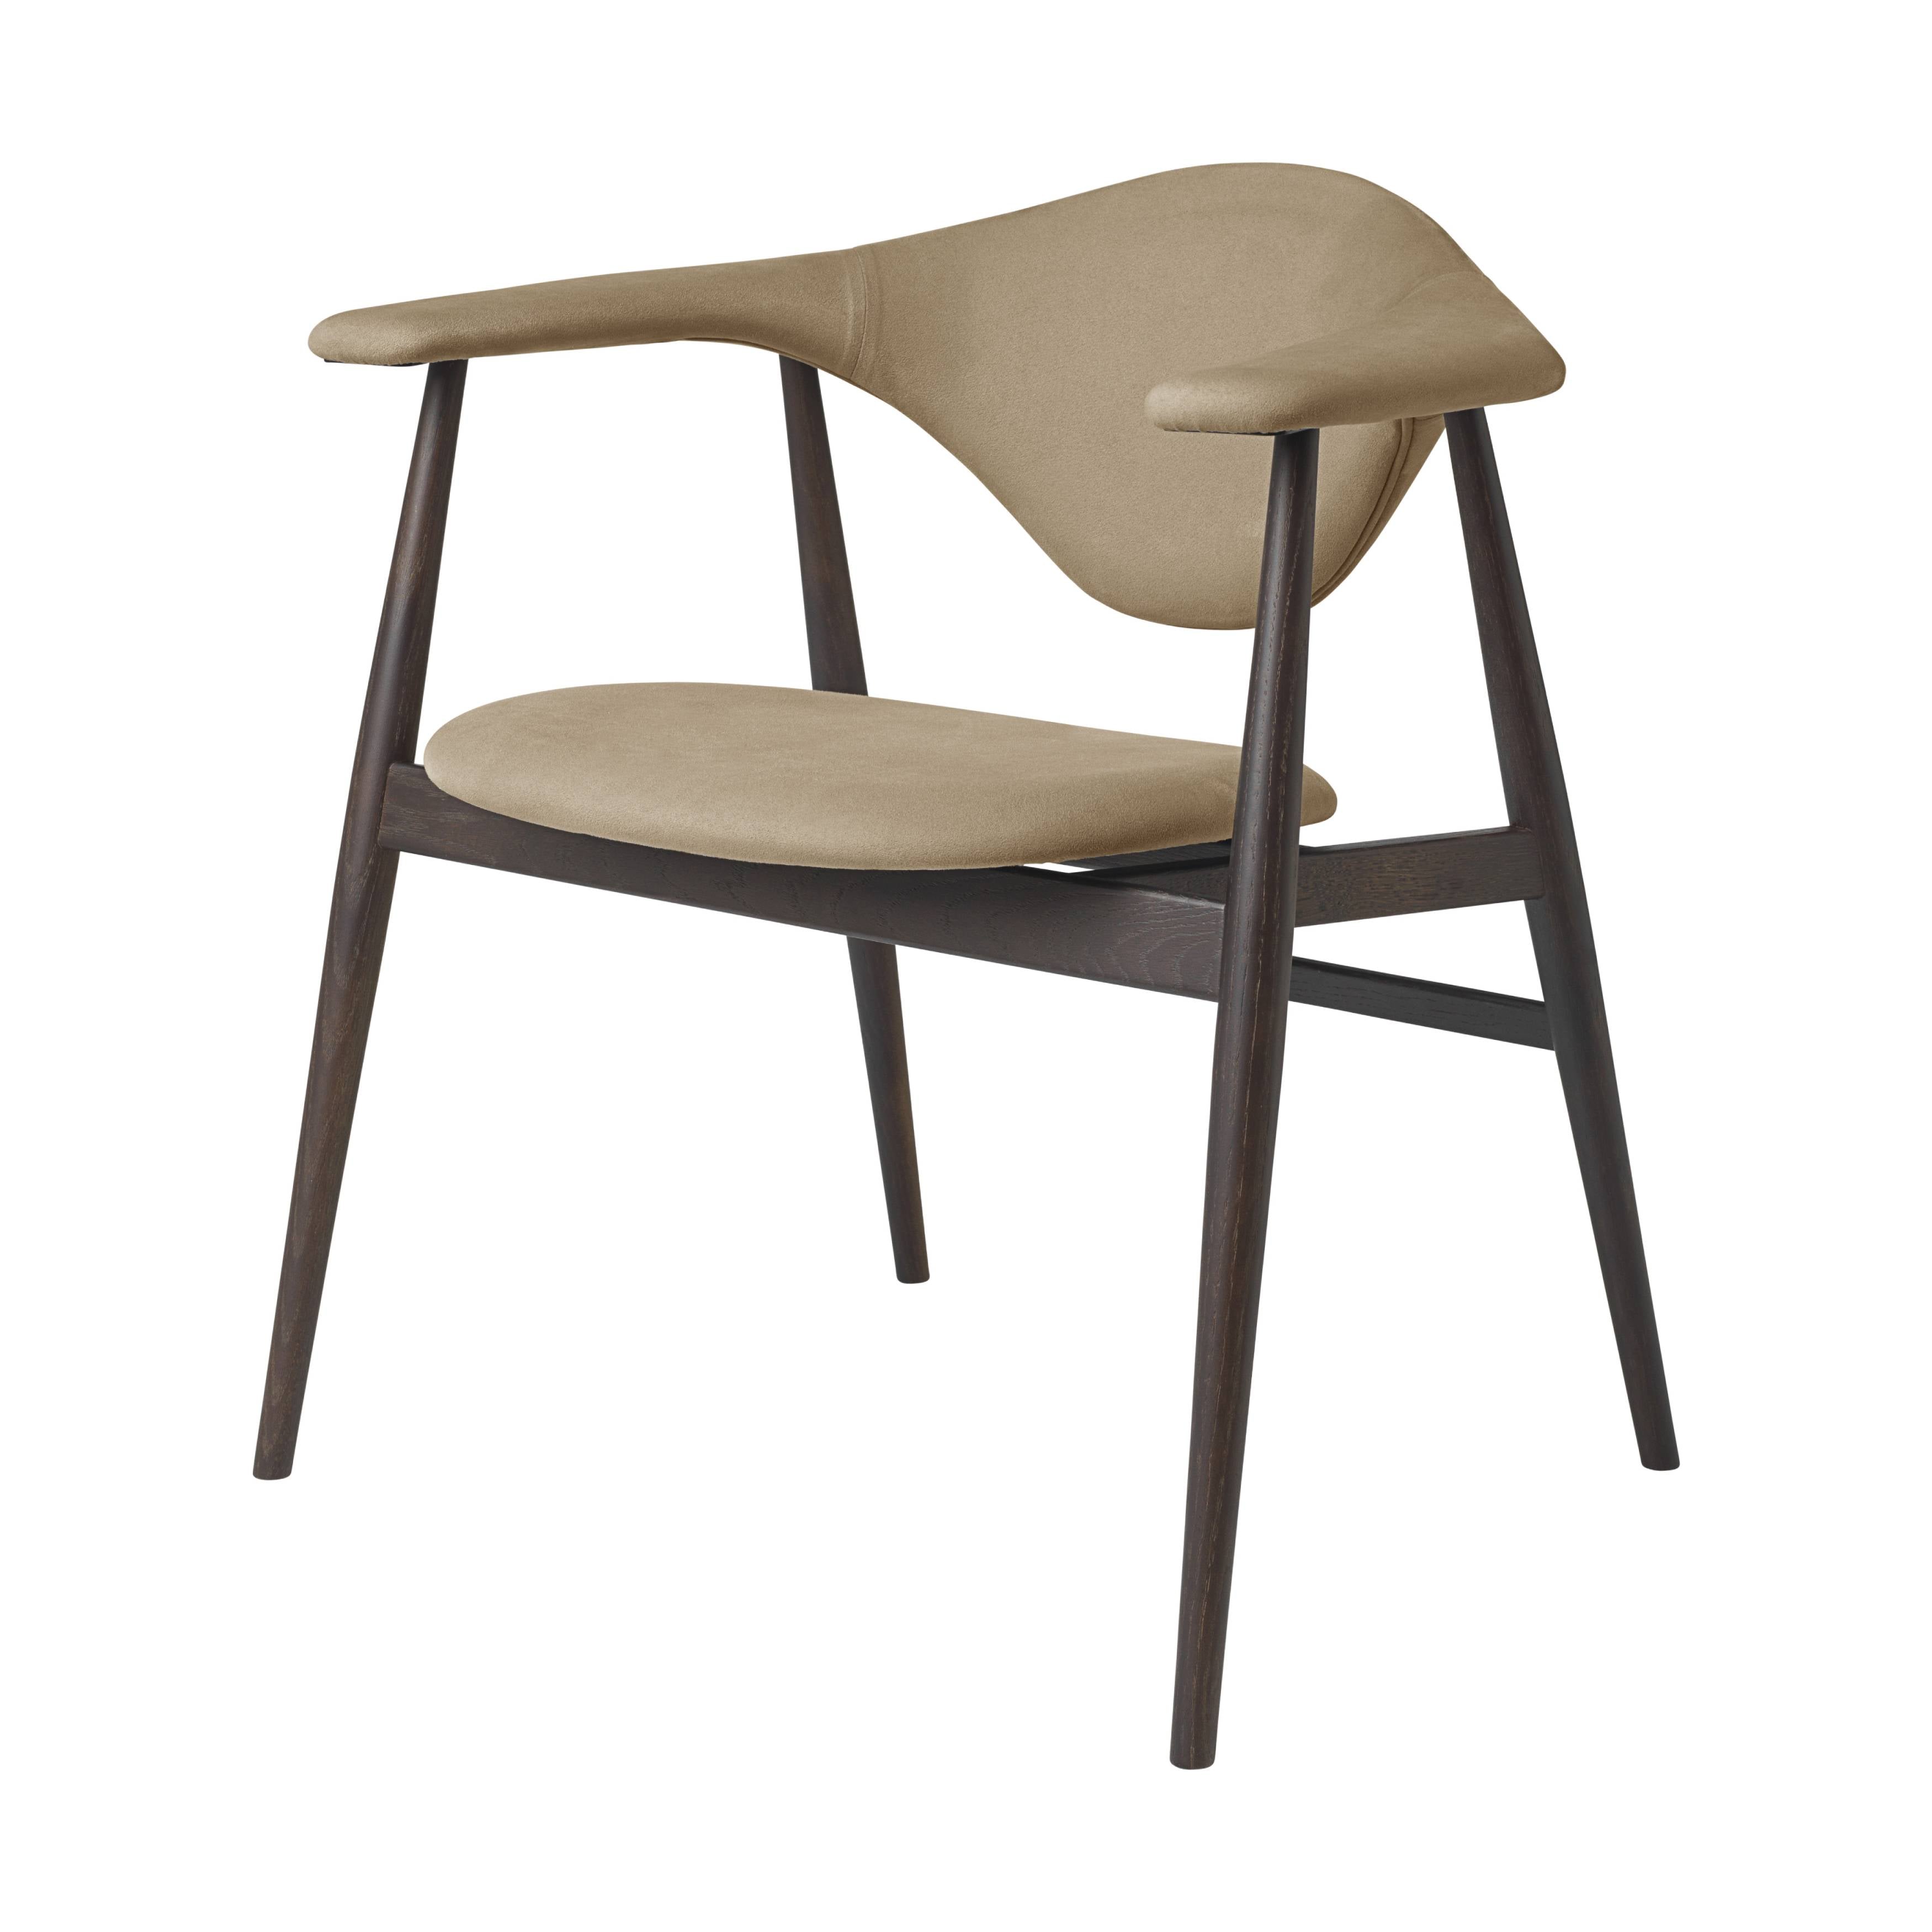 Masculo Dining Chair: Wood Base + Smoked Oak Matt Lacquered